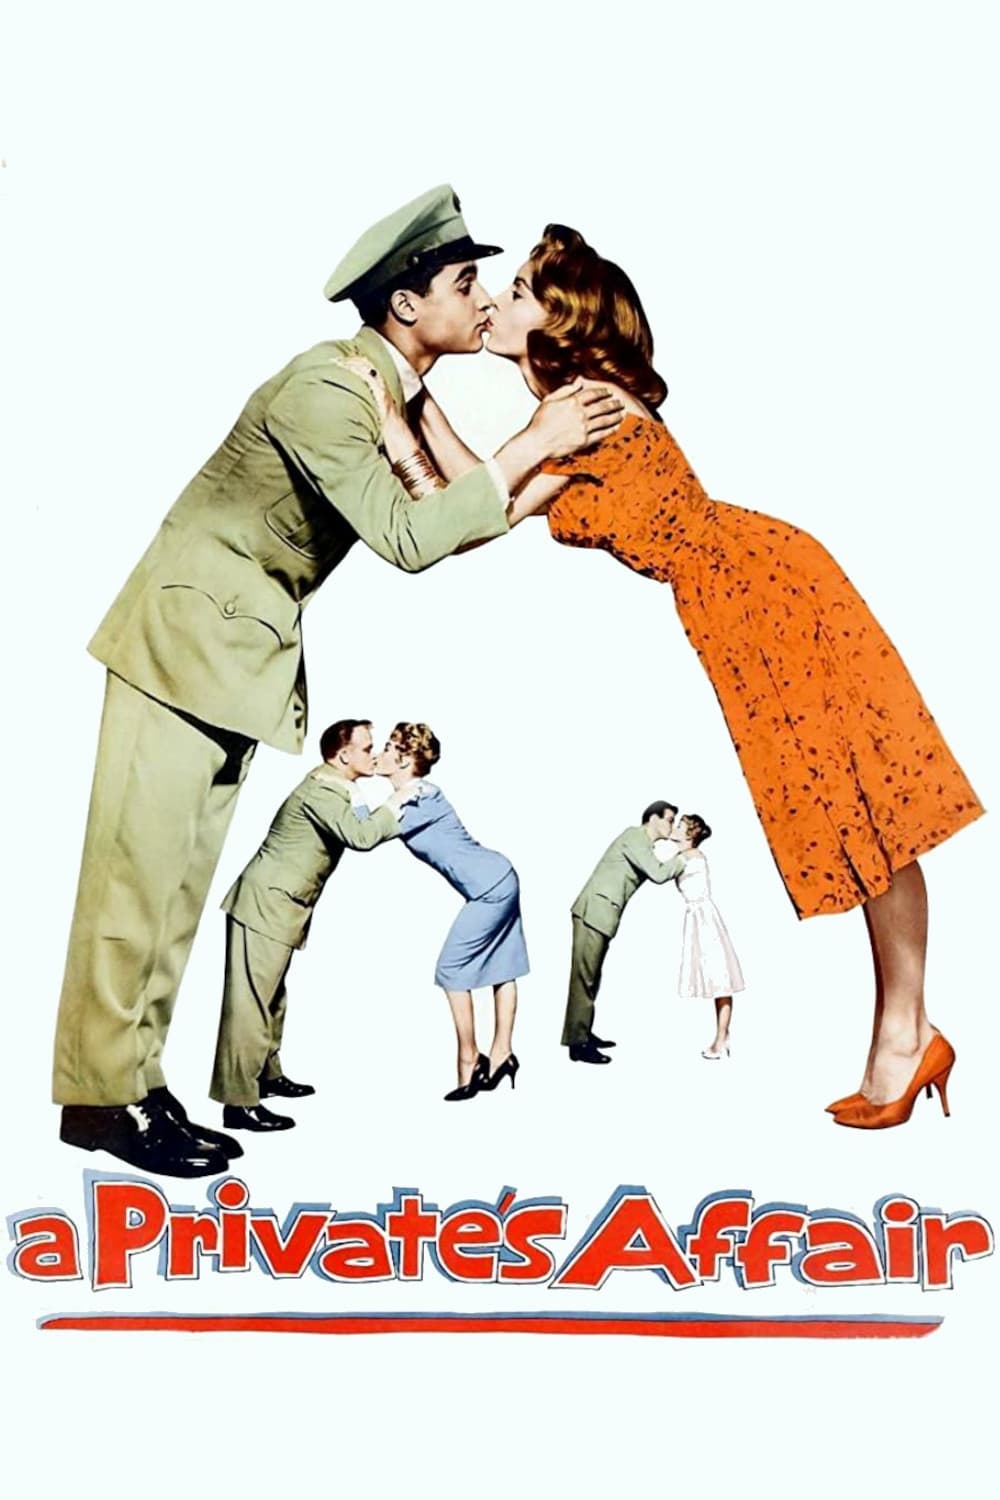 A Private's Affair film